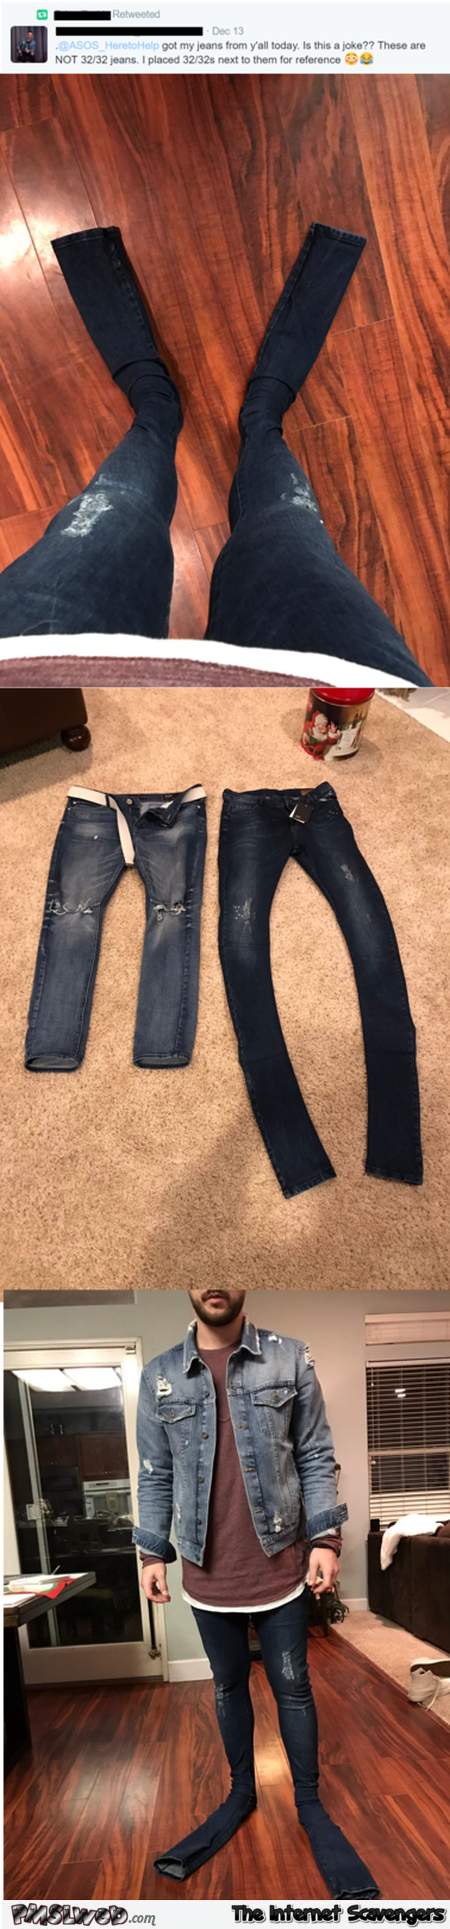 Funny jeans size fail – Funny Sunday balderdash @PMSLweb.com